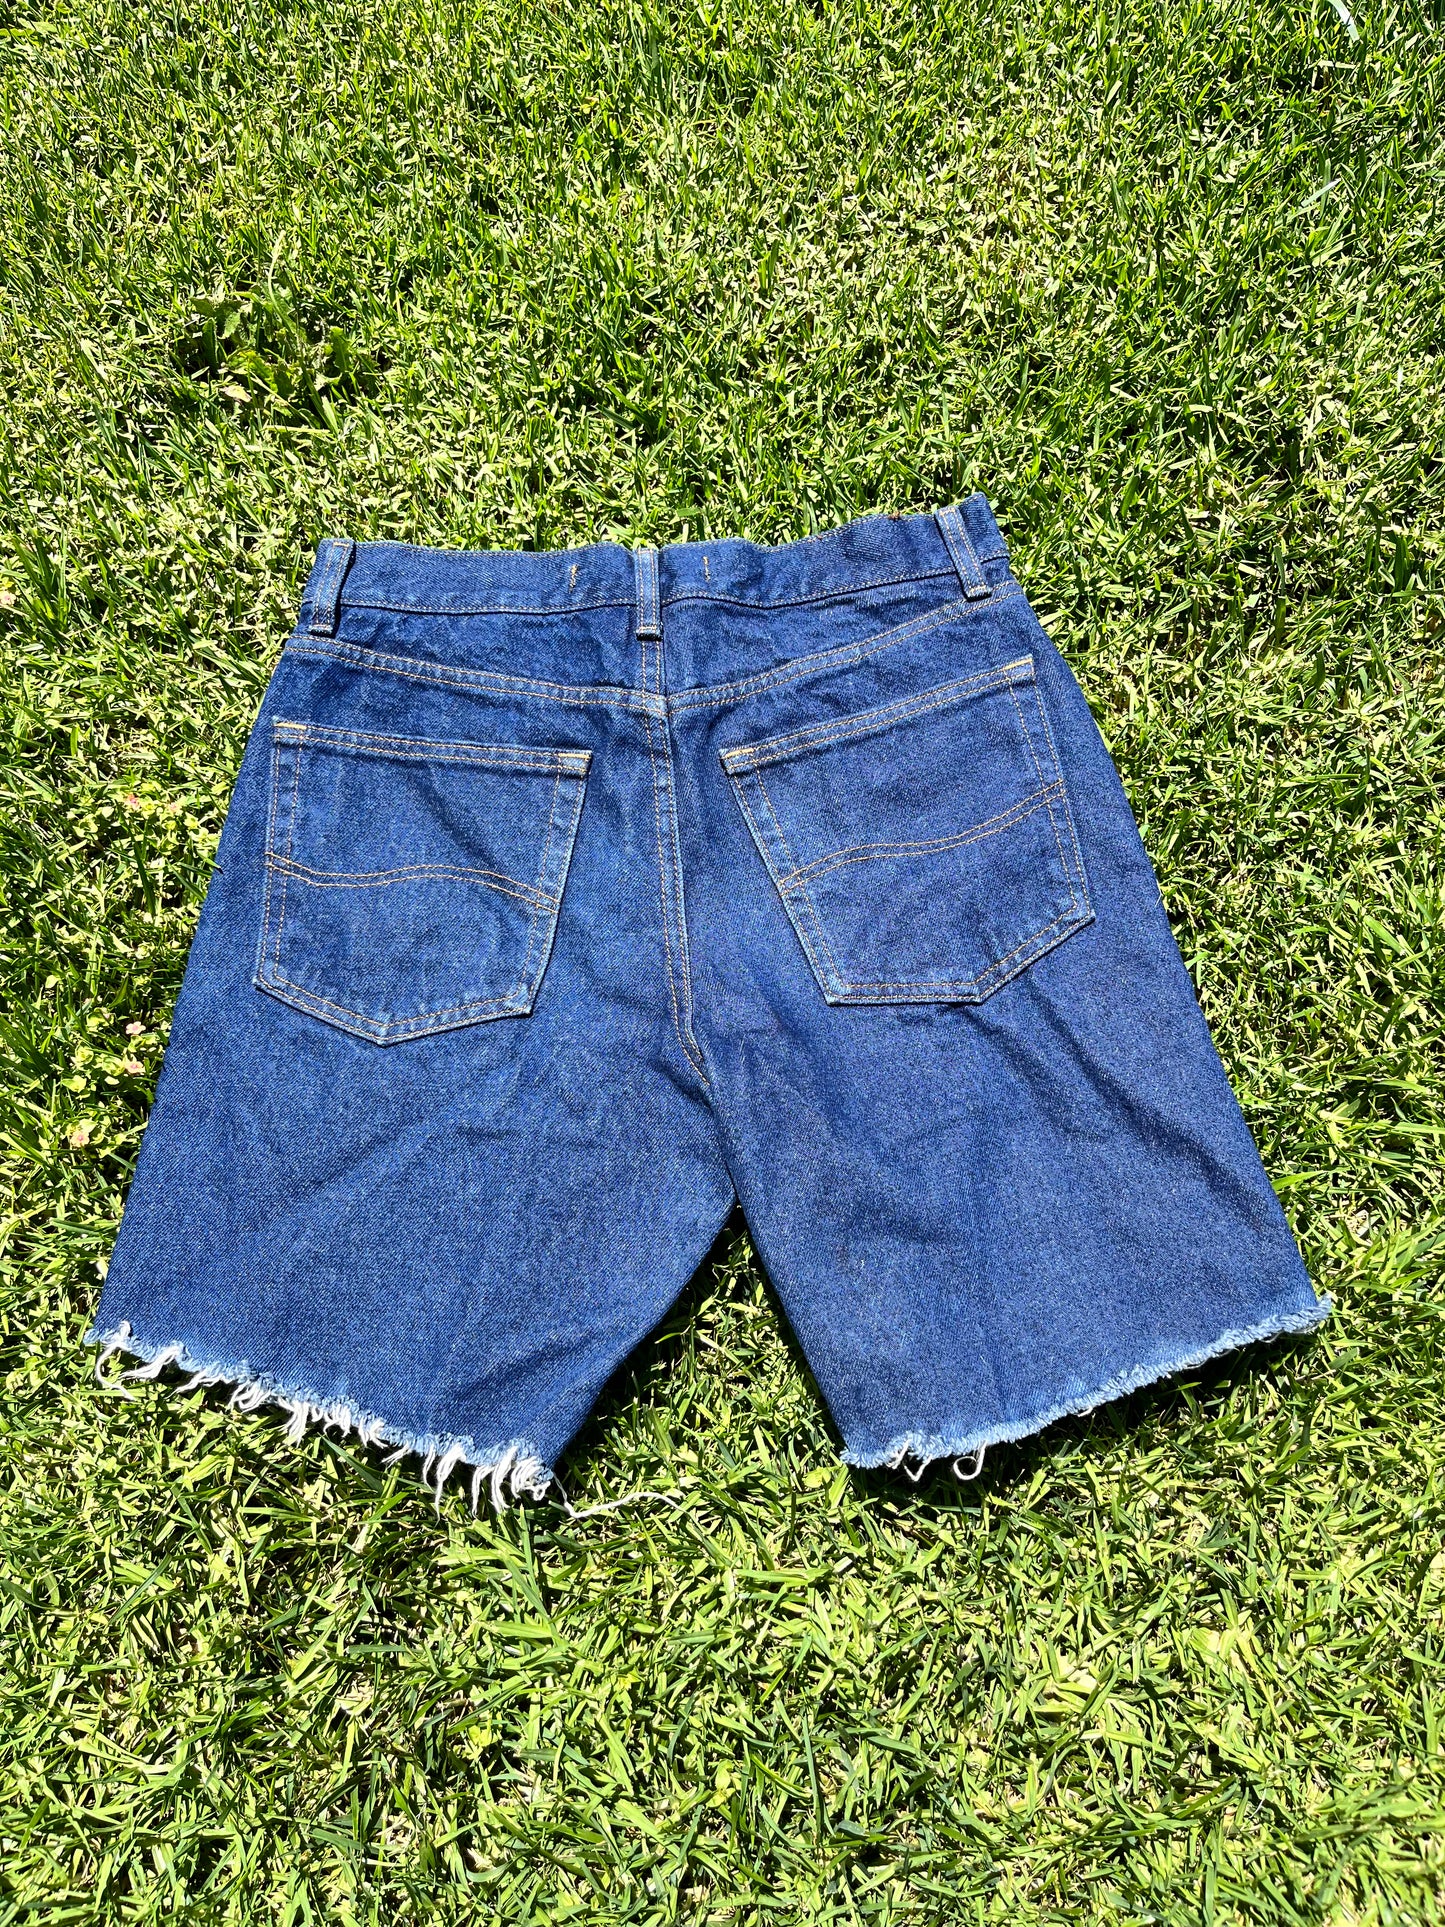 THE GET DOWN: Ra Ra’s LEE Vintage 1970s Denim Shorts (32)  JERIANA SAN JUAN Vintage 70s Denim Jeans (28)